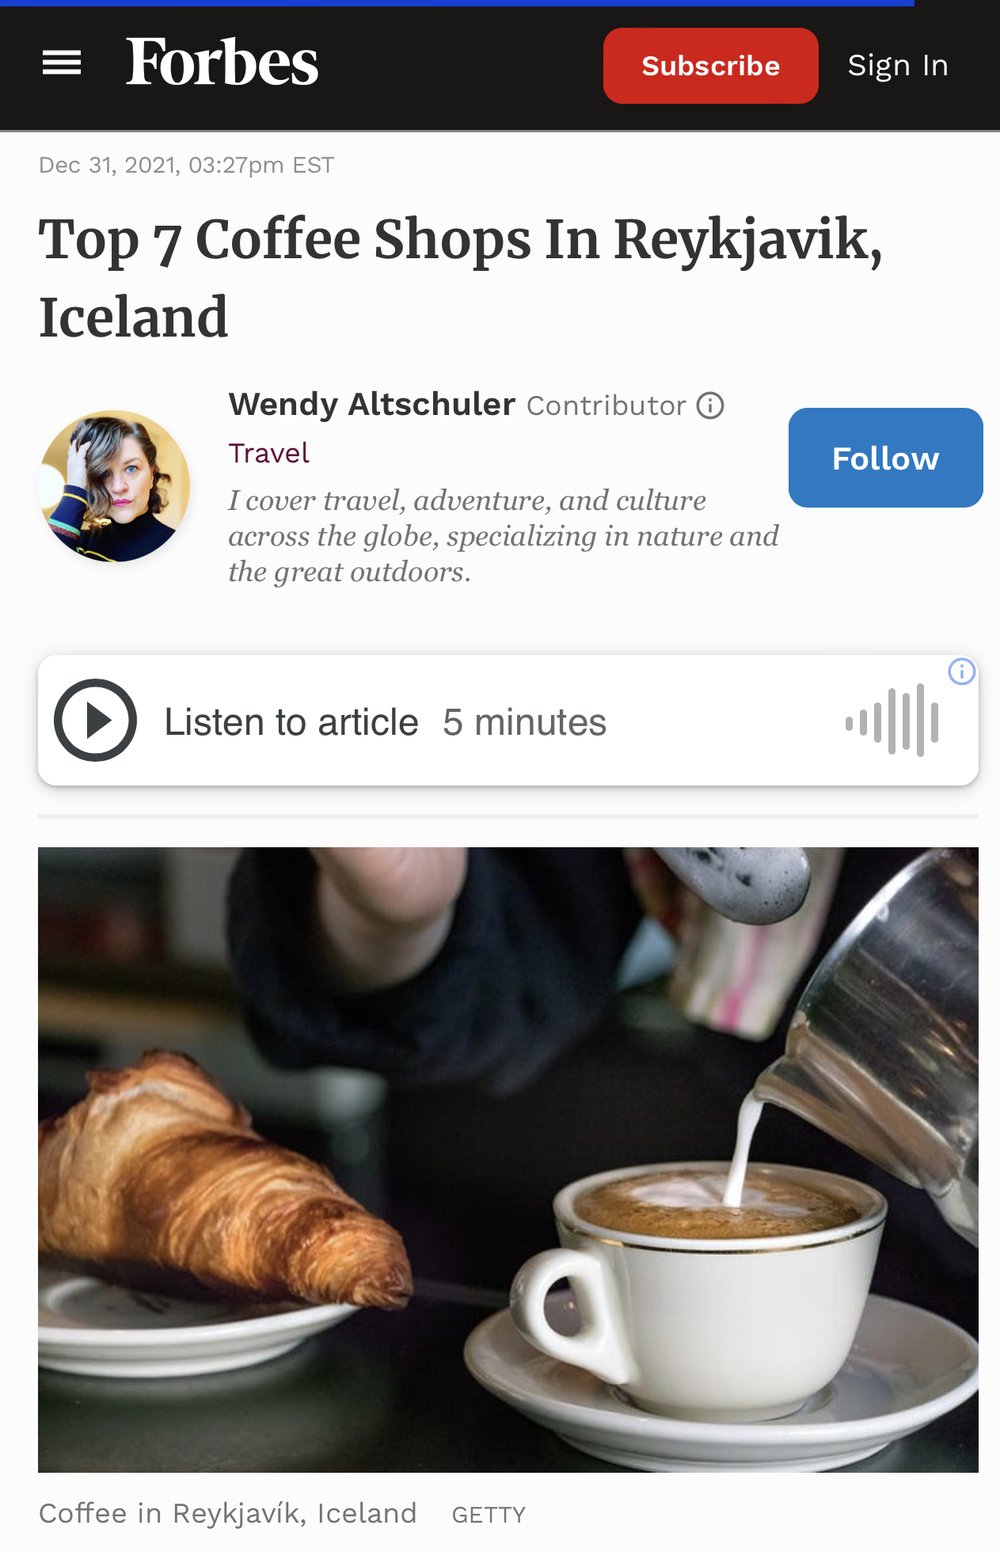 Top 7 Coffee Shops In Reykjavik, Iceland